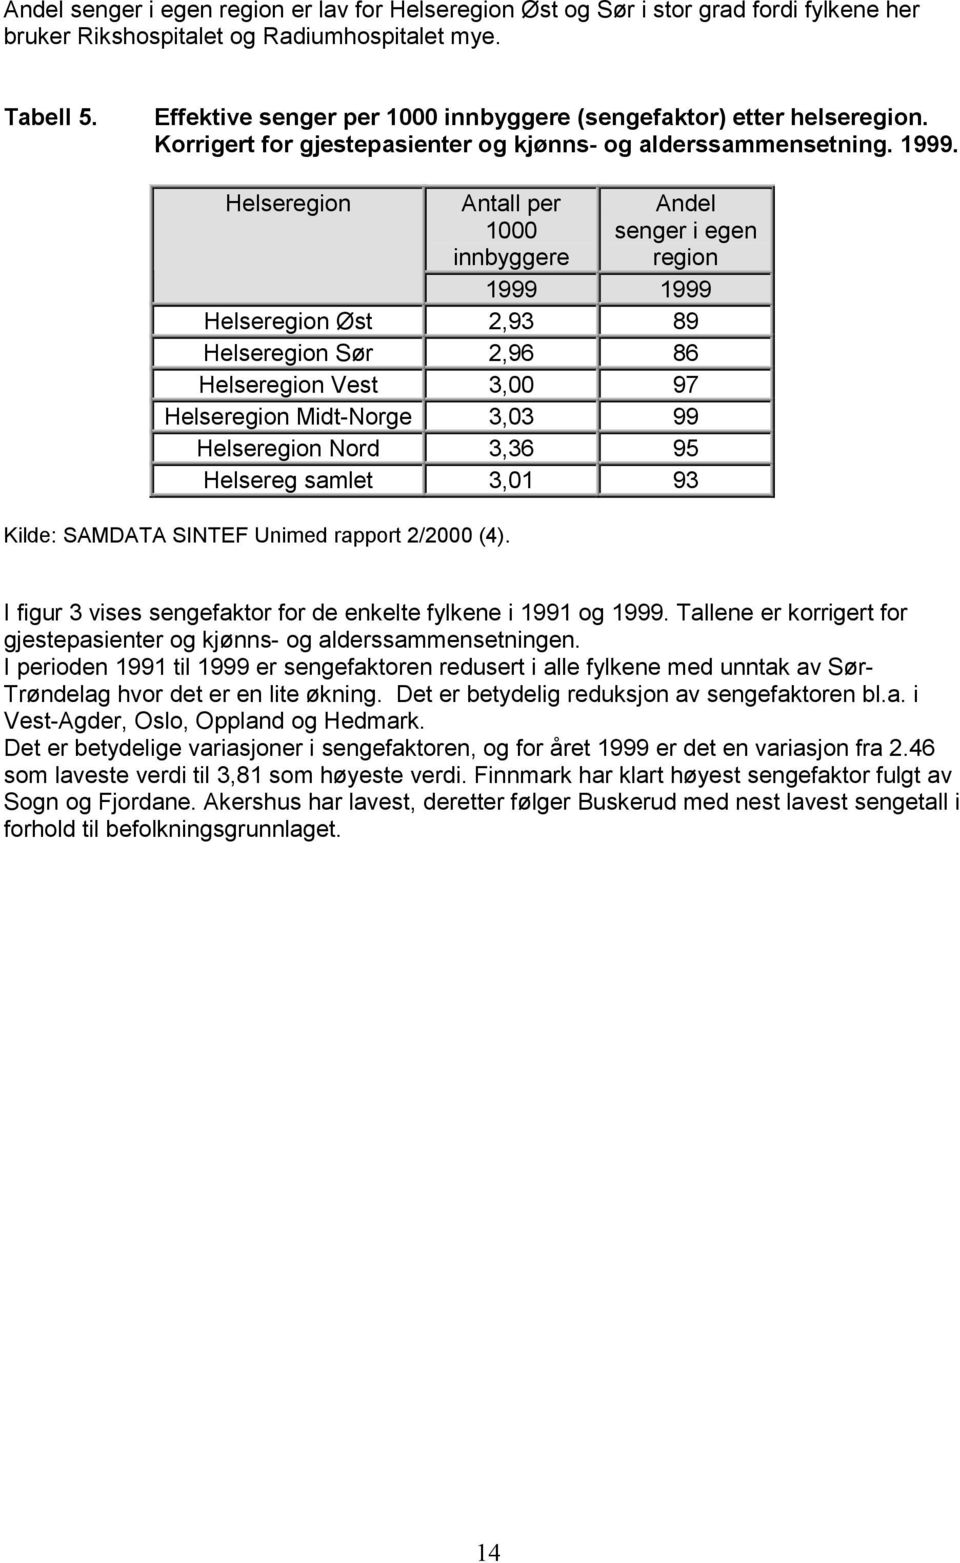 Helseregion Antall per 1000 innbyggere Andel senger i egen region 1999 1999 Helseregion Øst 2,93 89 Helseregion Sør 2,96 86 Helseregion Vest 3,00 97 Helseregion Midt-Norge 3,03 99 Helseregion Nord